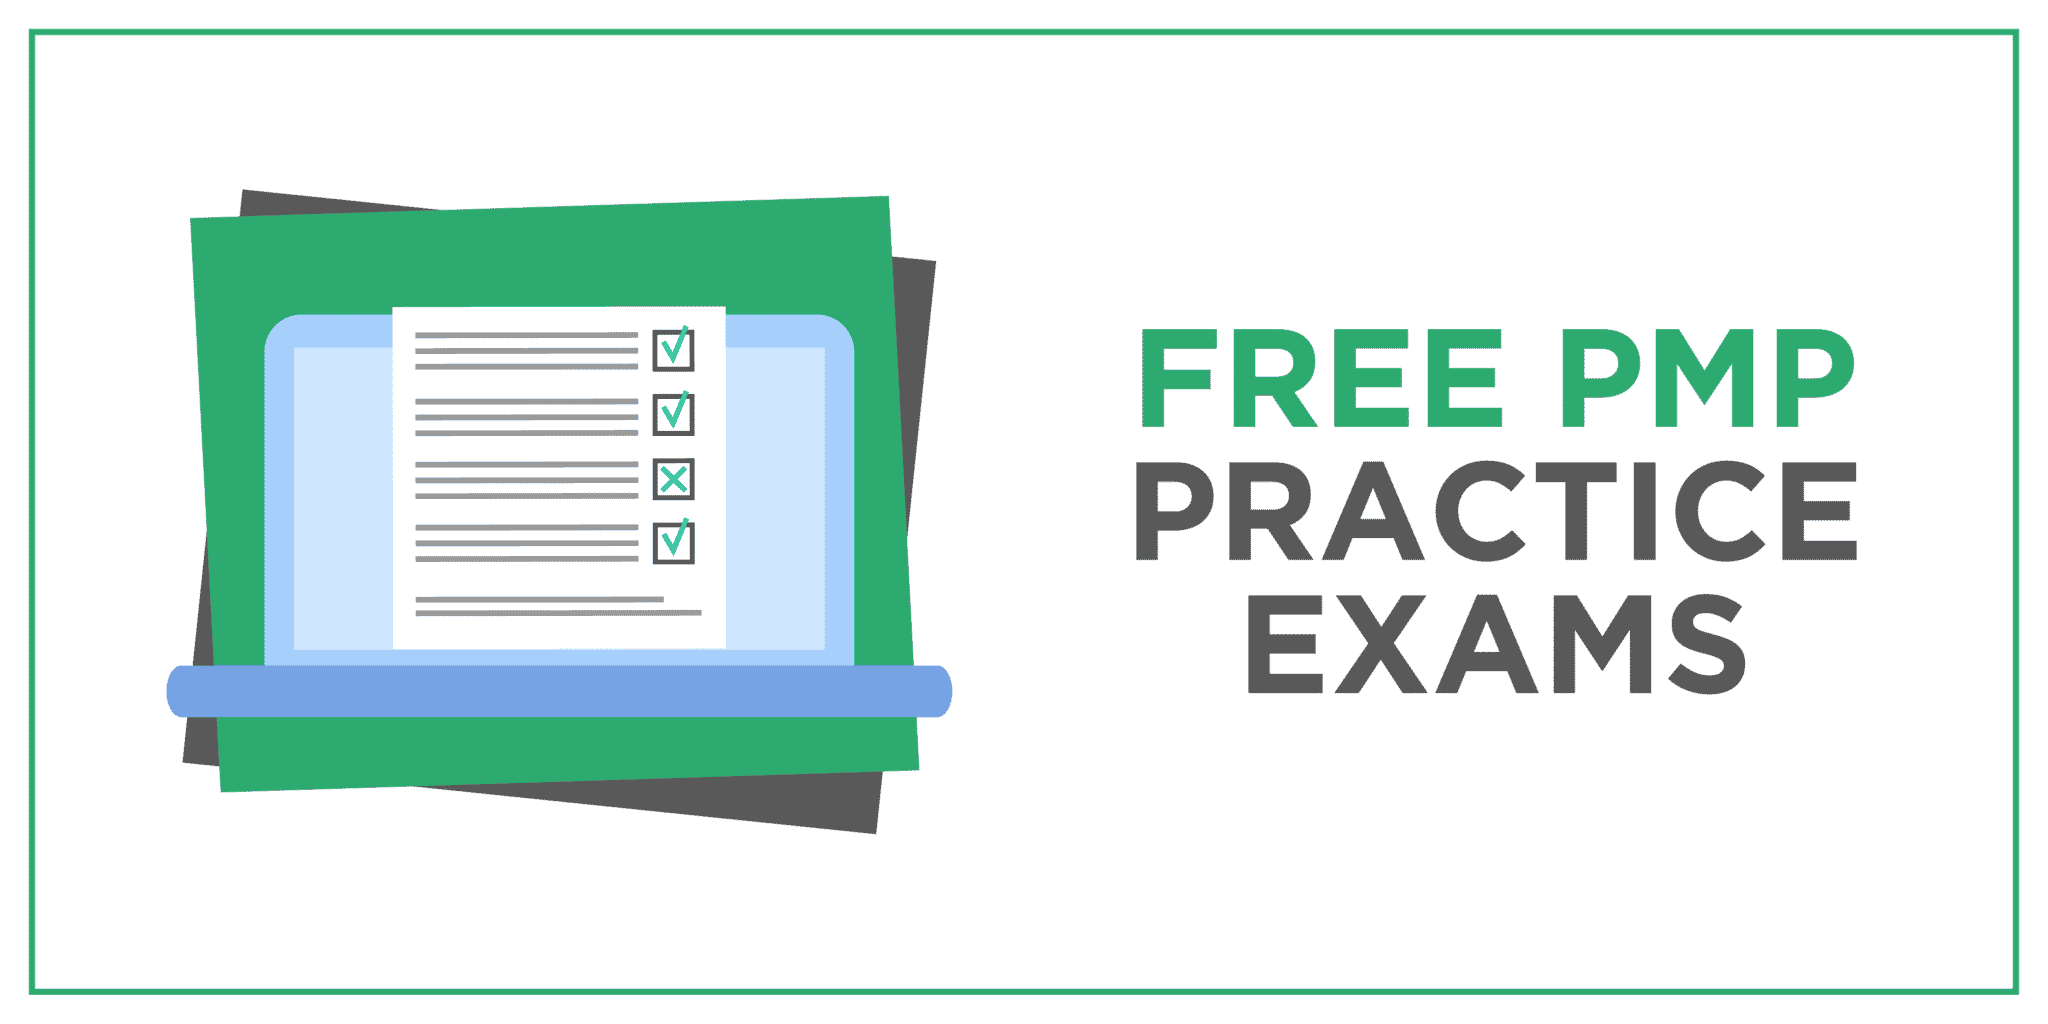 Free PMP Practice Exams